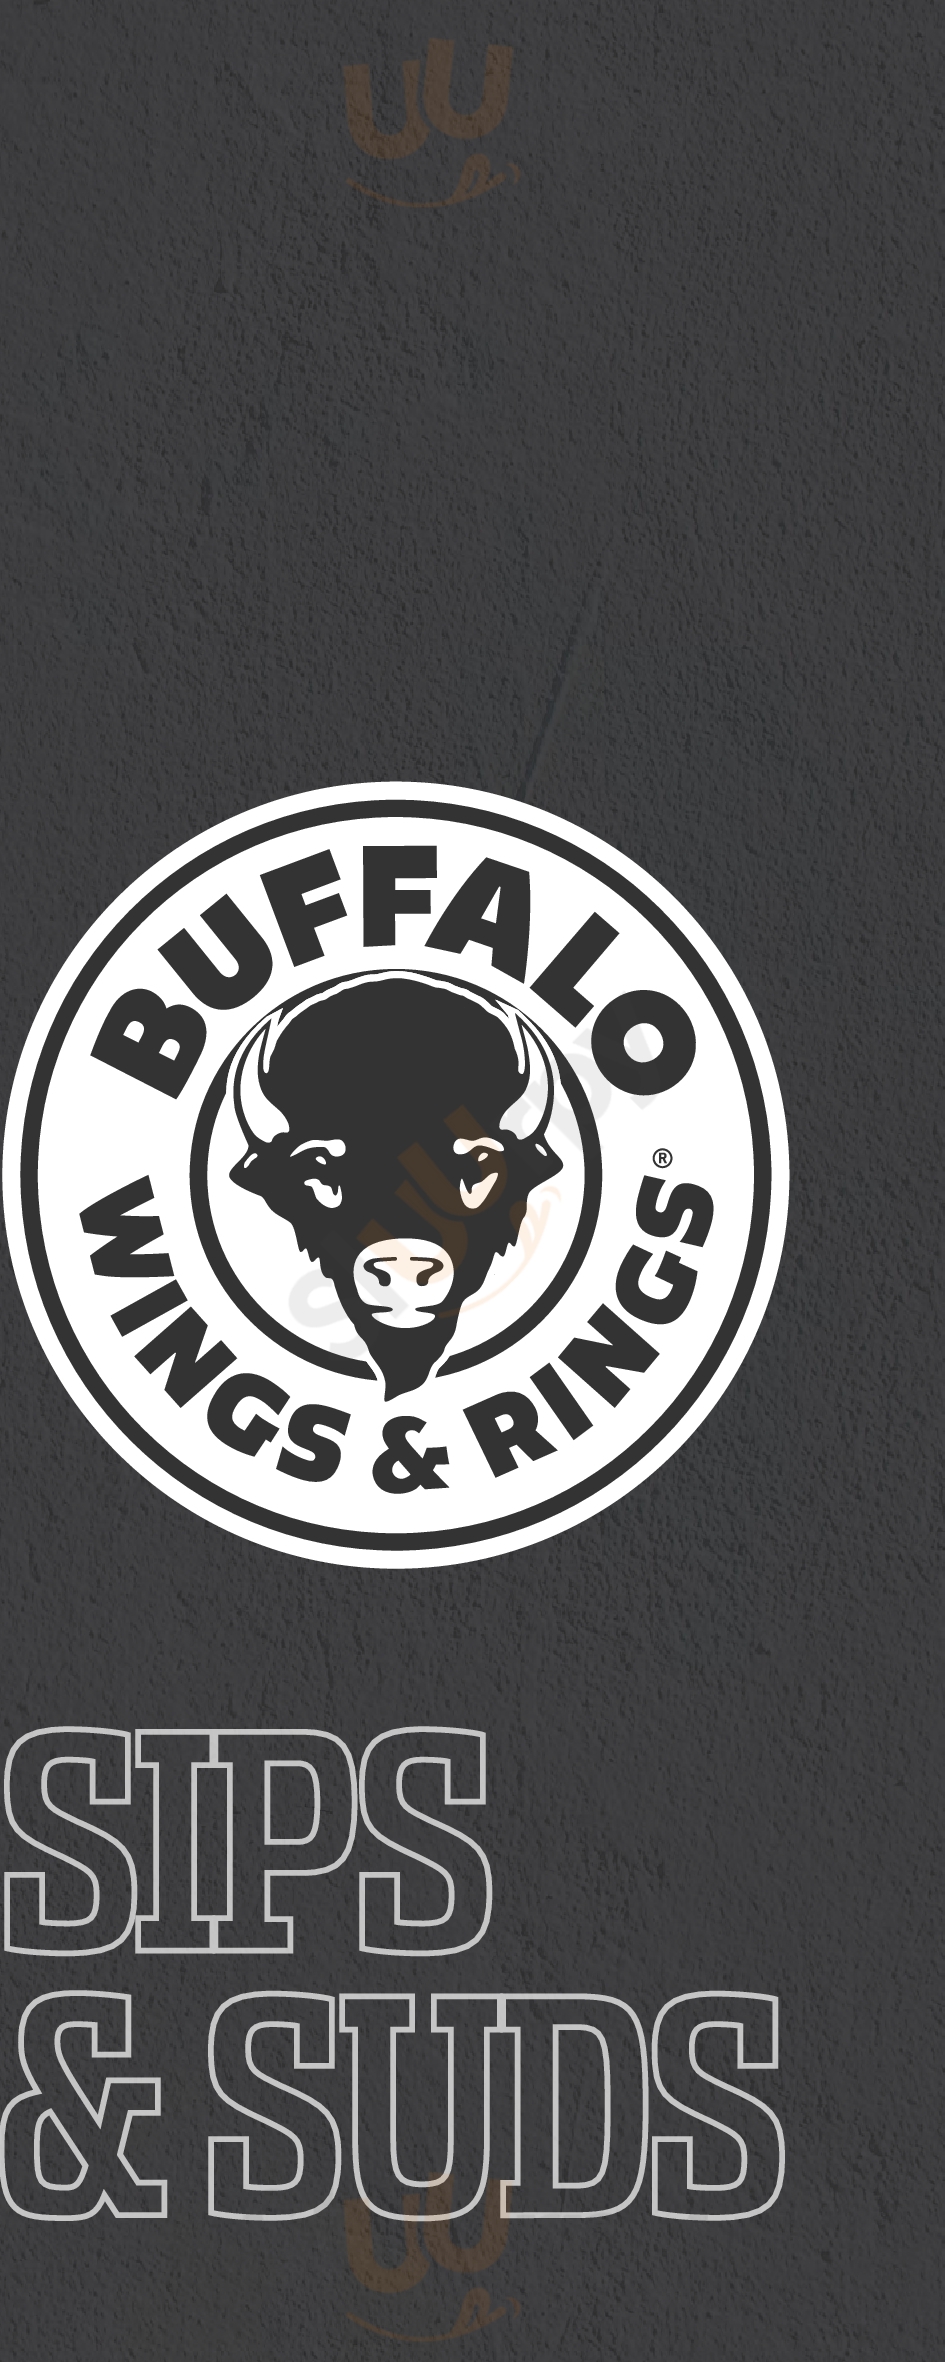 Buffalo Wings & Rings Limassol City Menu - 1